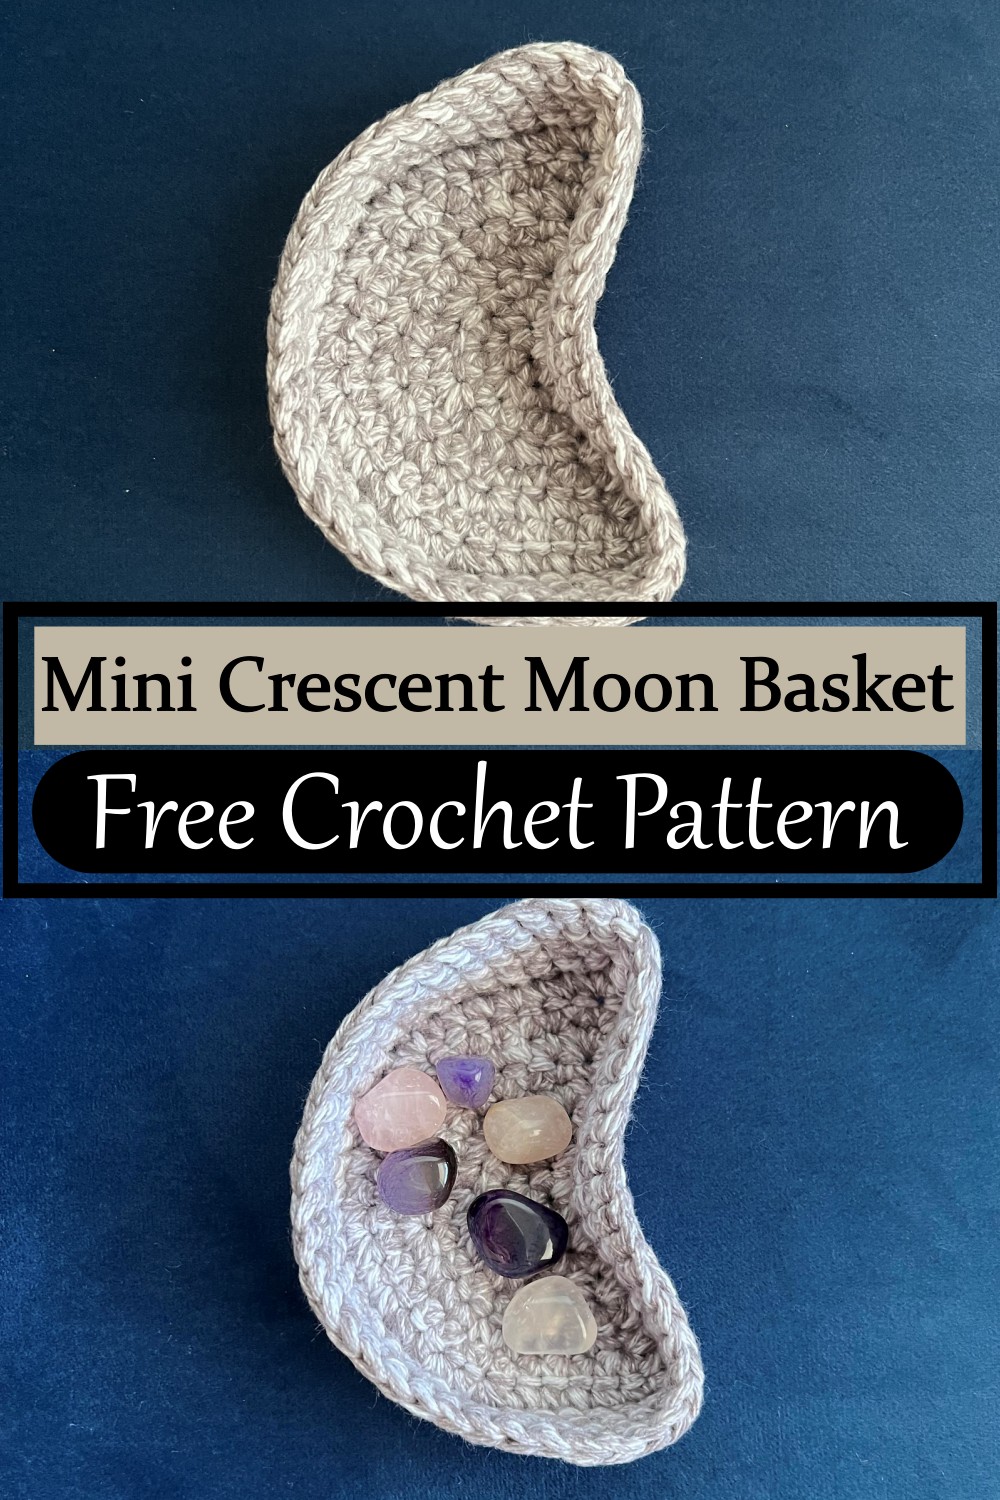 Mini Crescent Moon Basket